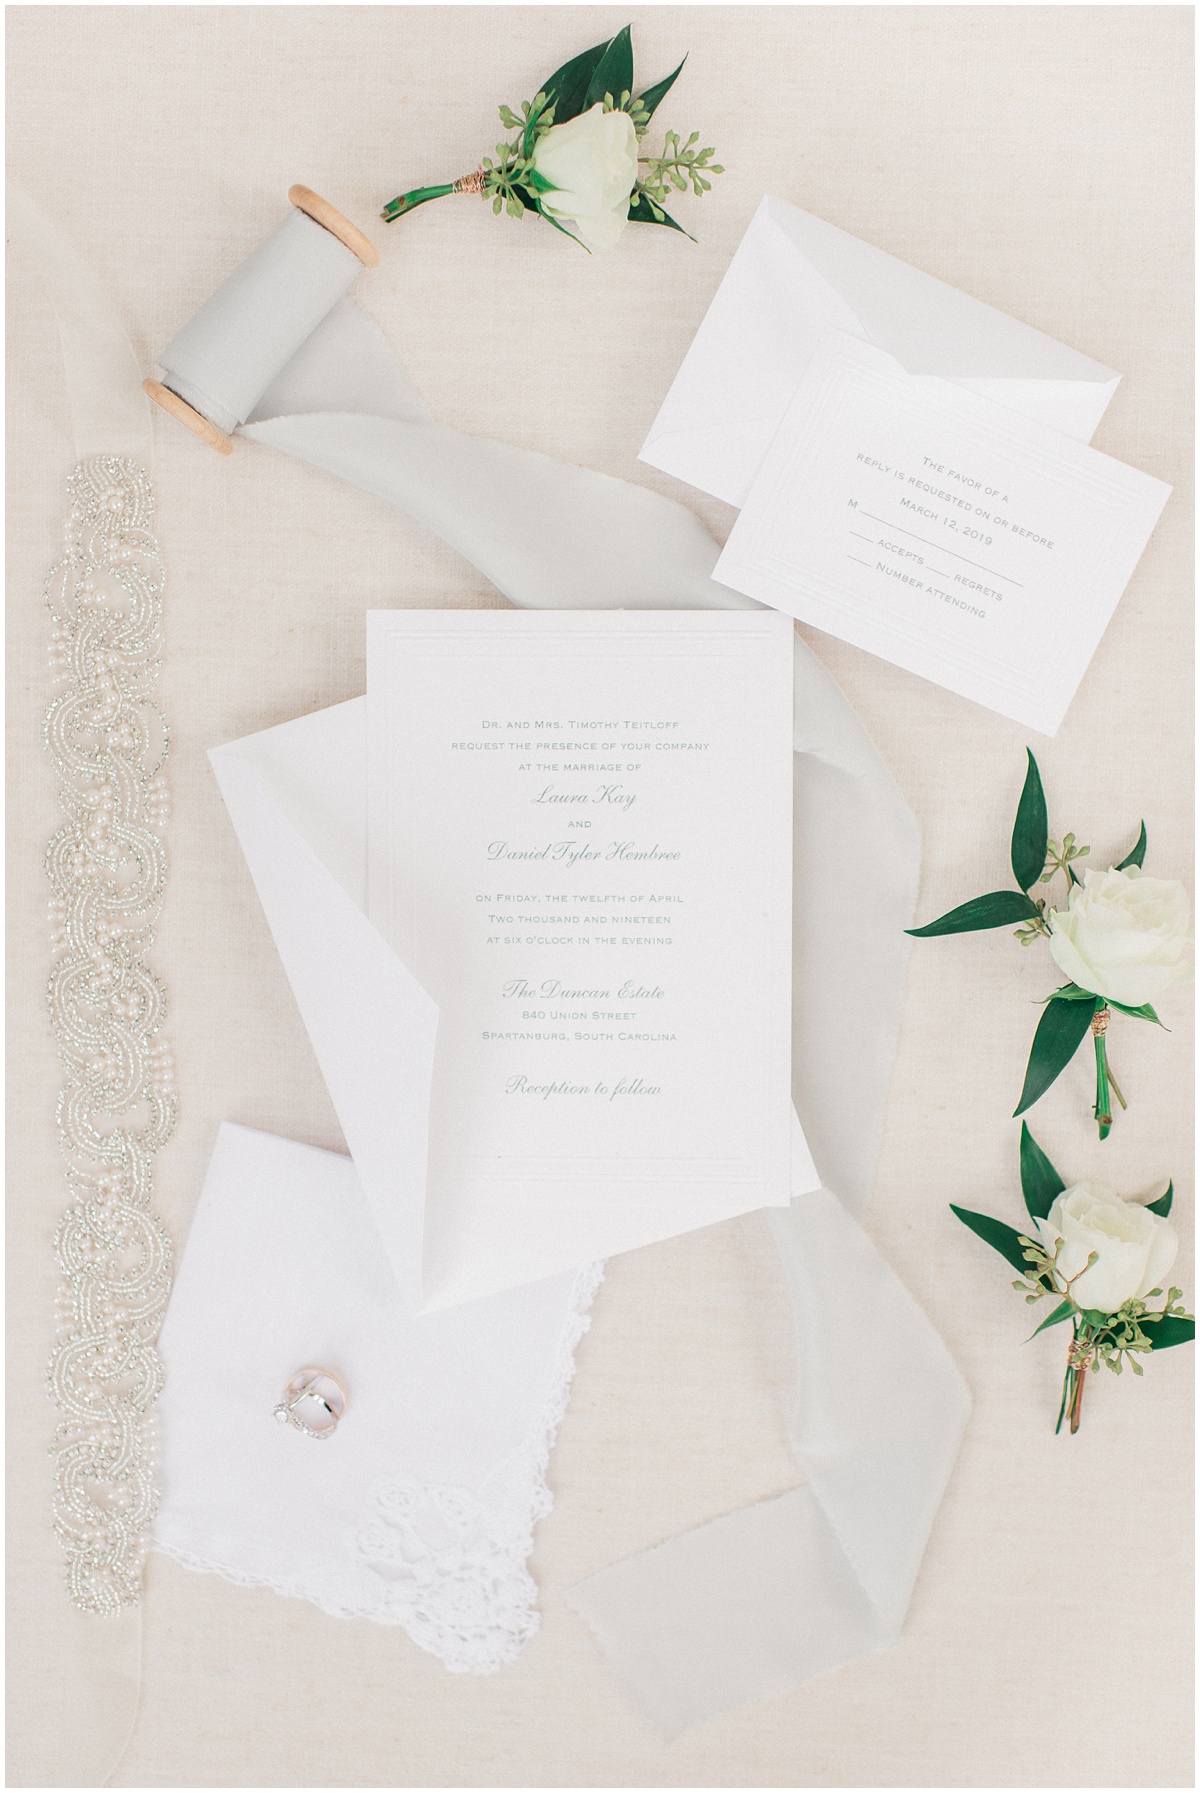 Light blue inspired wedding invitation suite